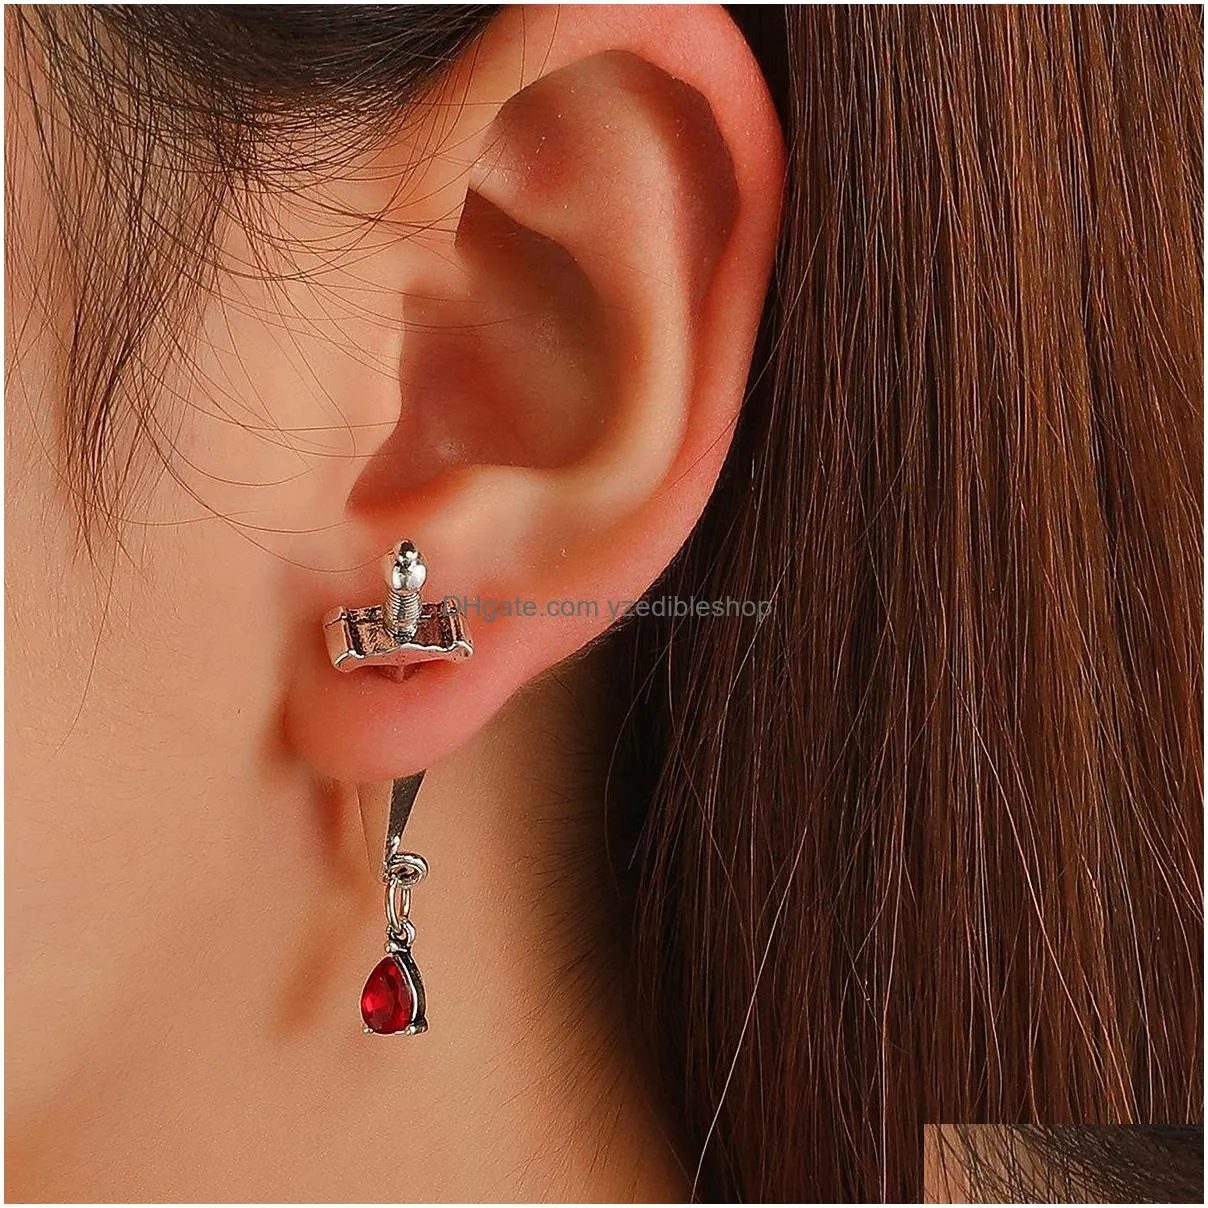 europe fashion jewelry short sword stud earring gothic red drop blood cross earrings